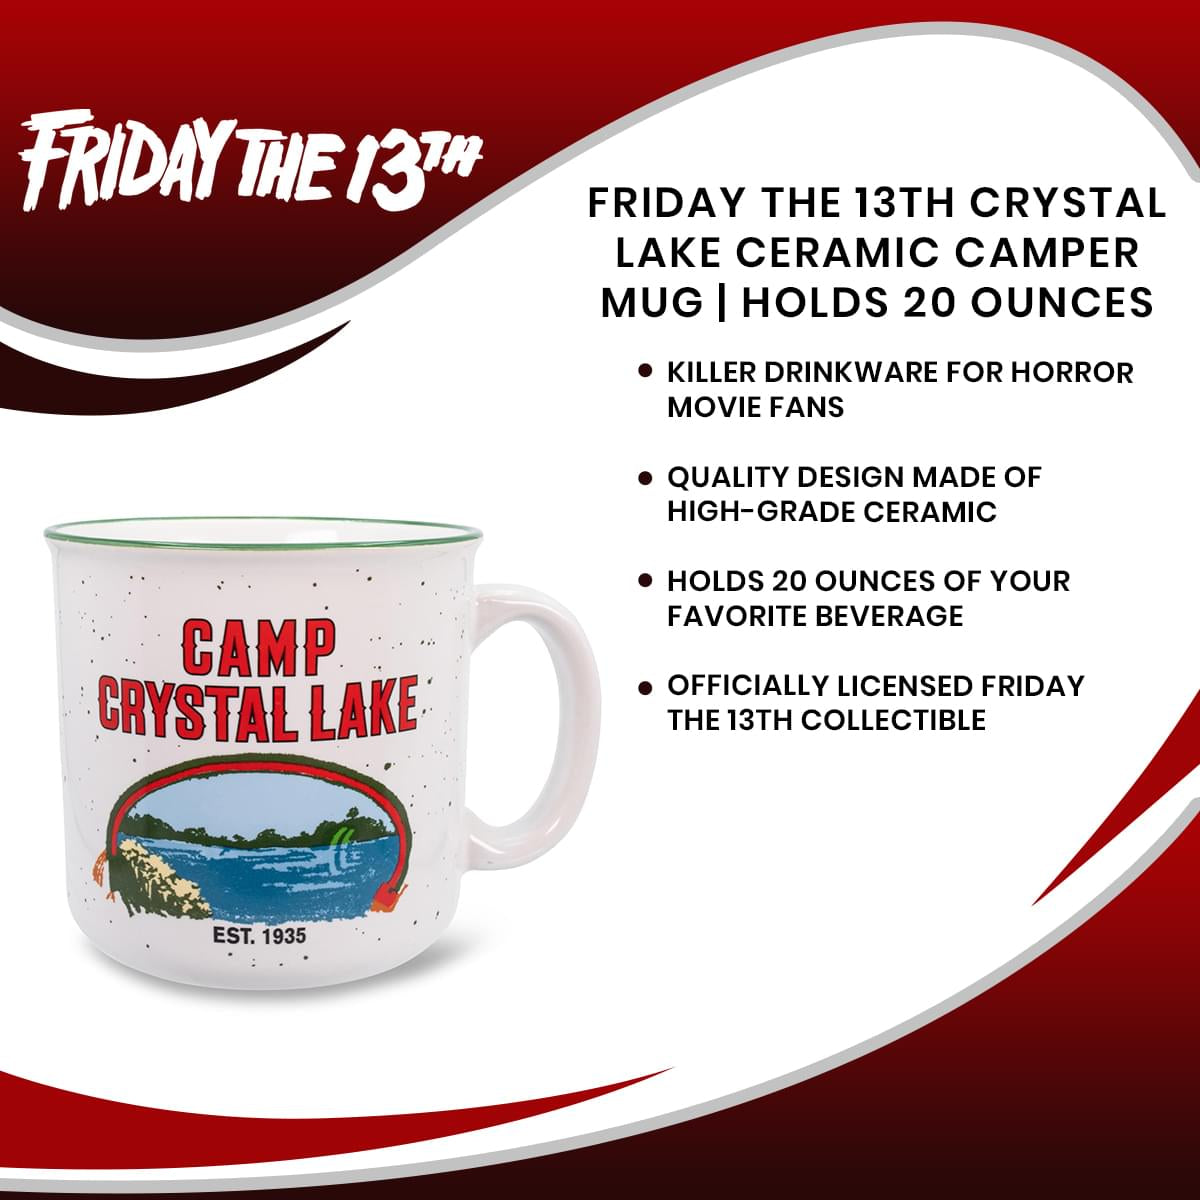 Friday the 13th Crystal Lake Ceramic Camper Mug | Holds 20 Ounces